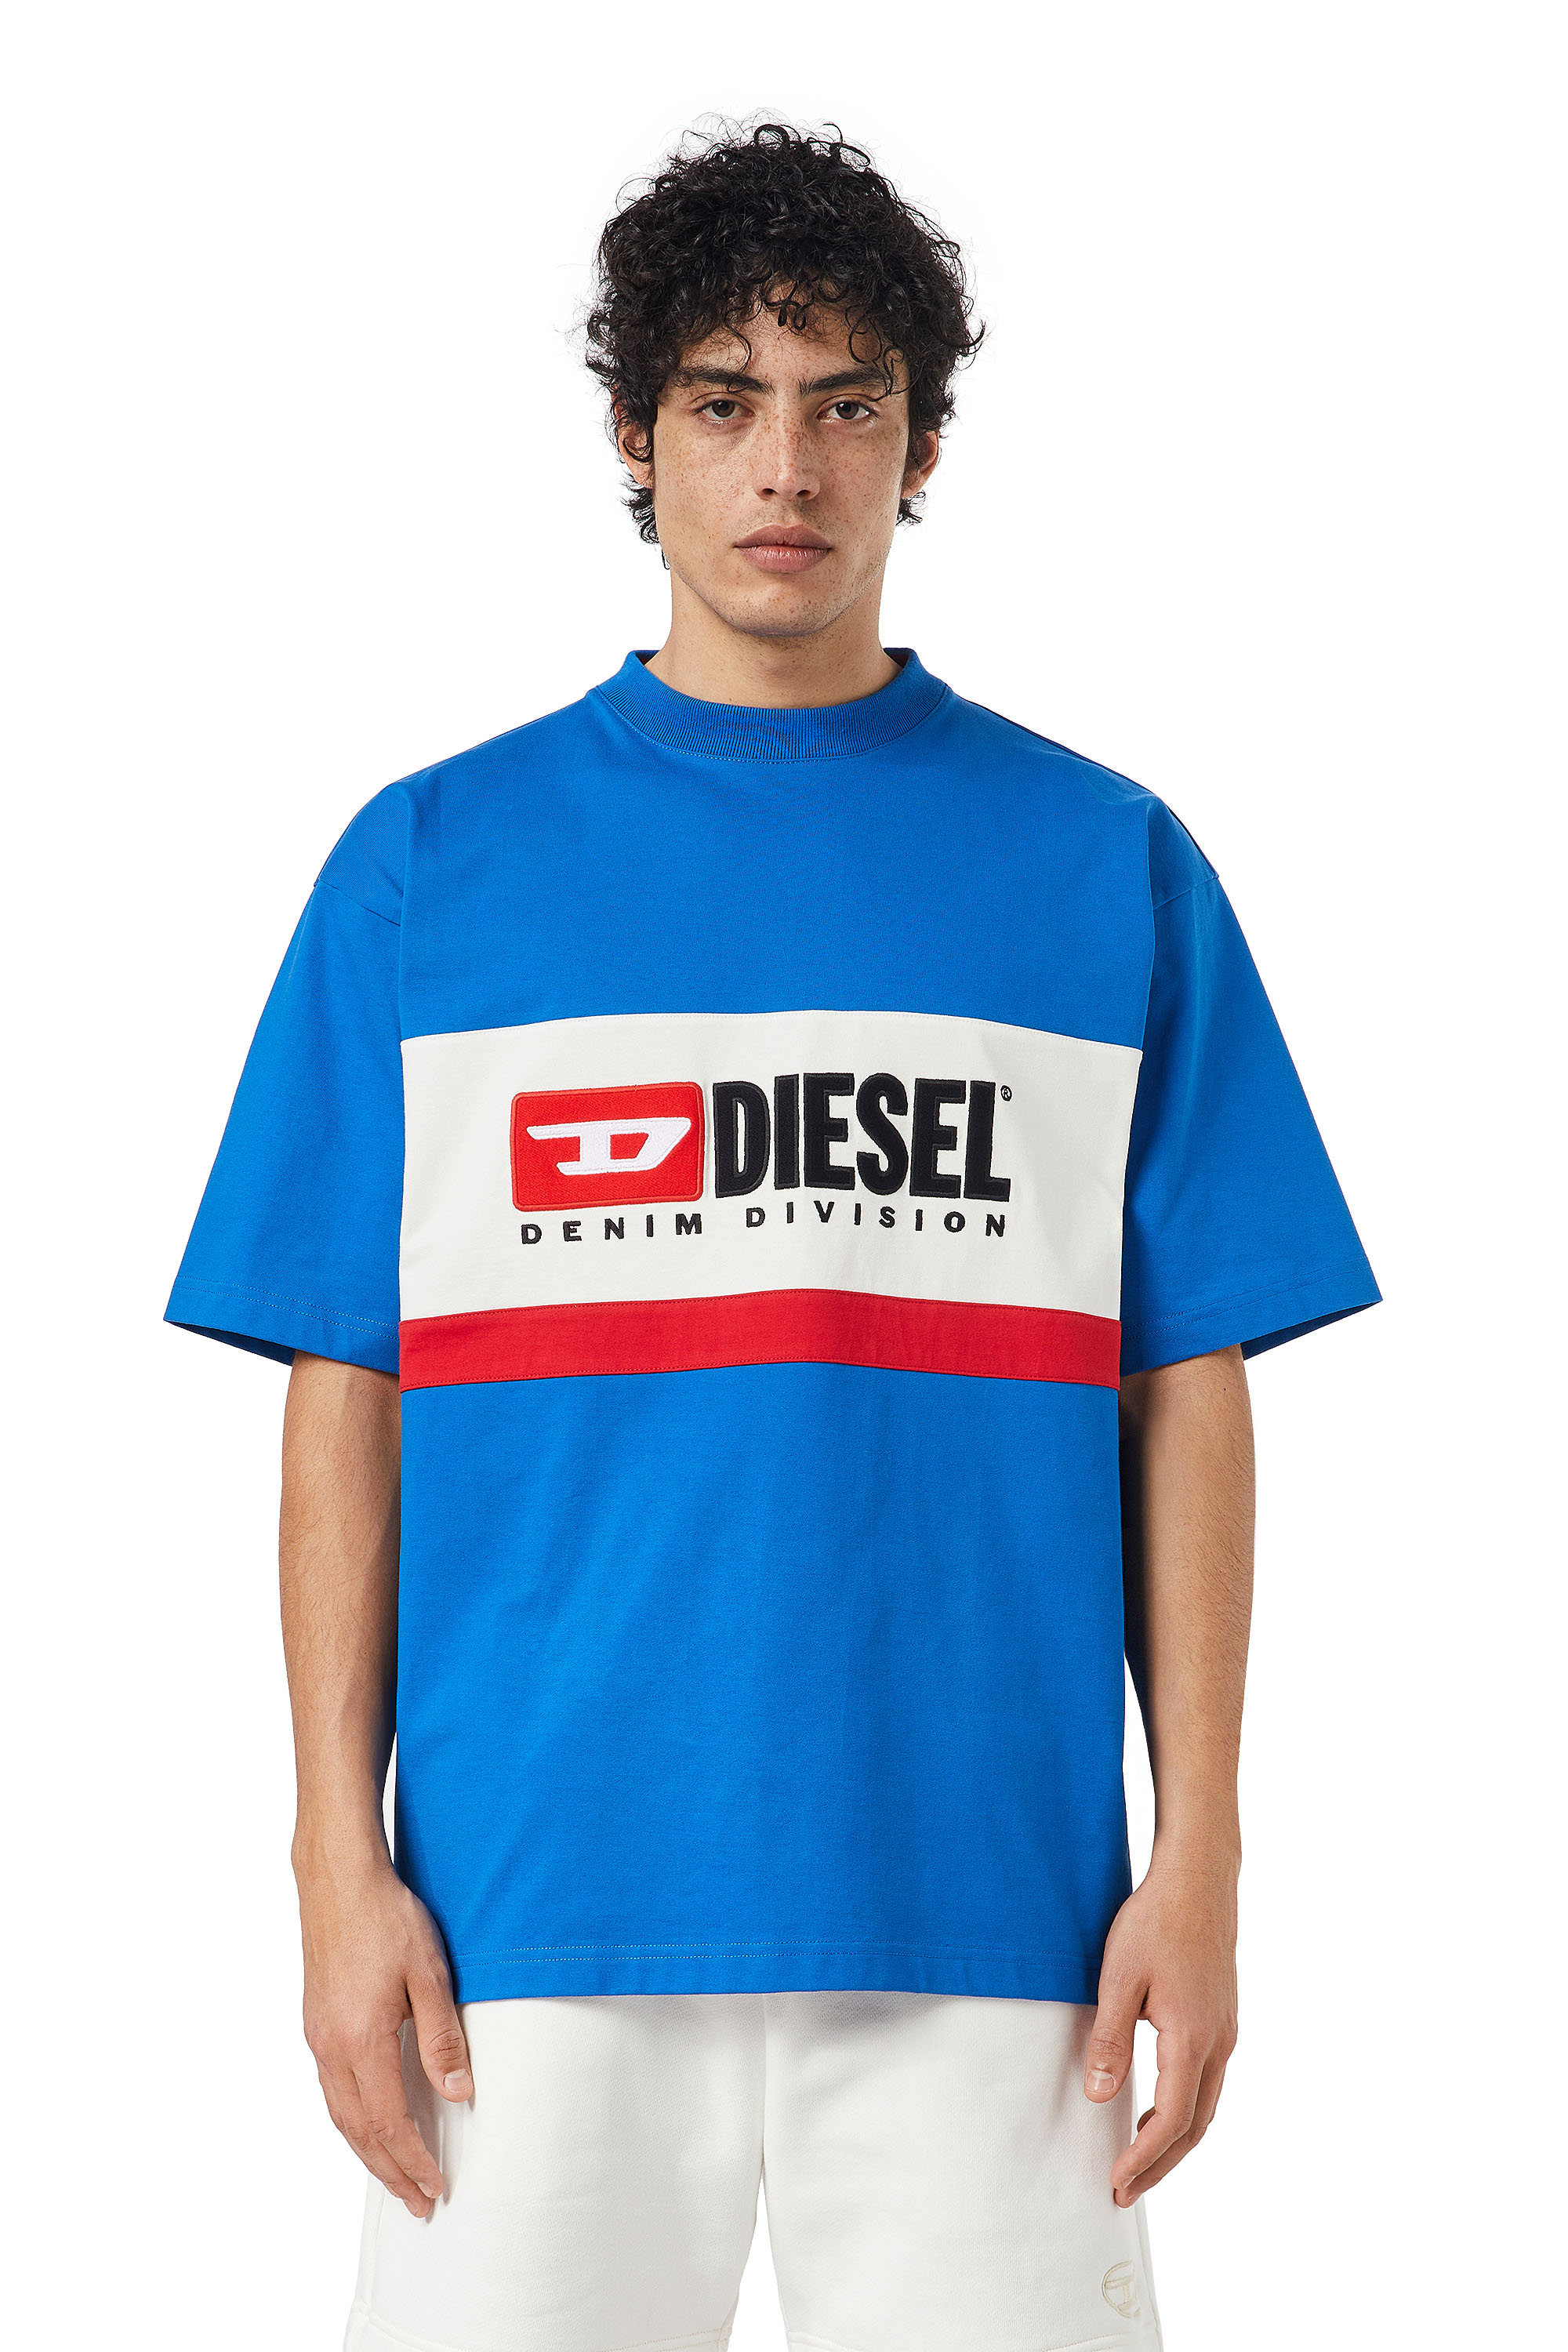 Diesel - T-STREAP-DIVISION, Blu - Image 1